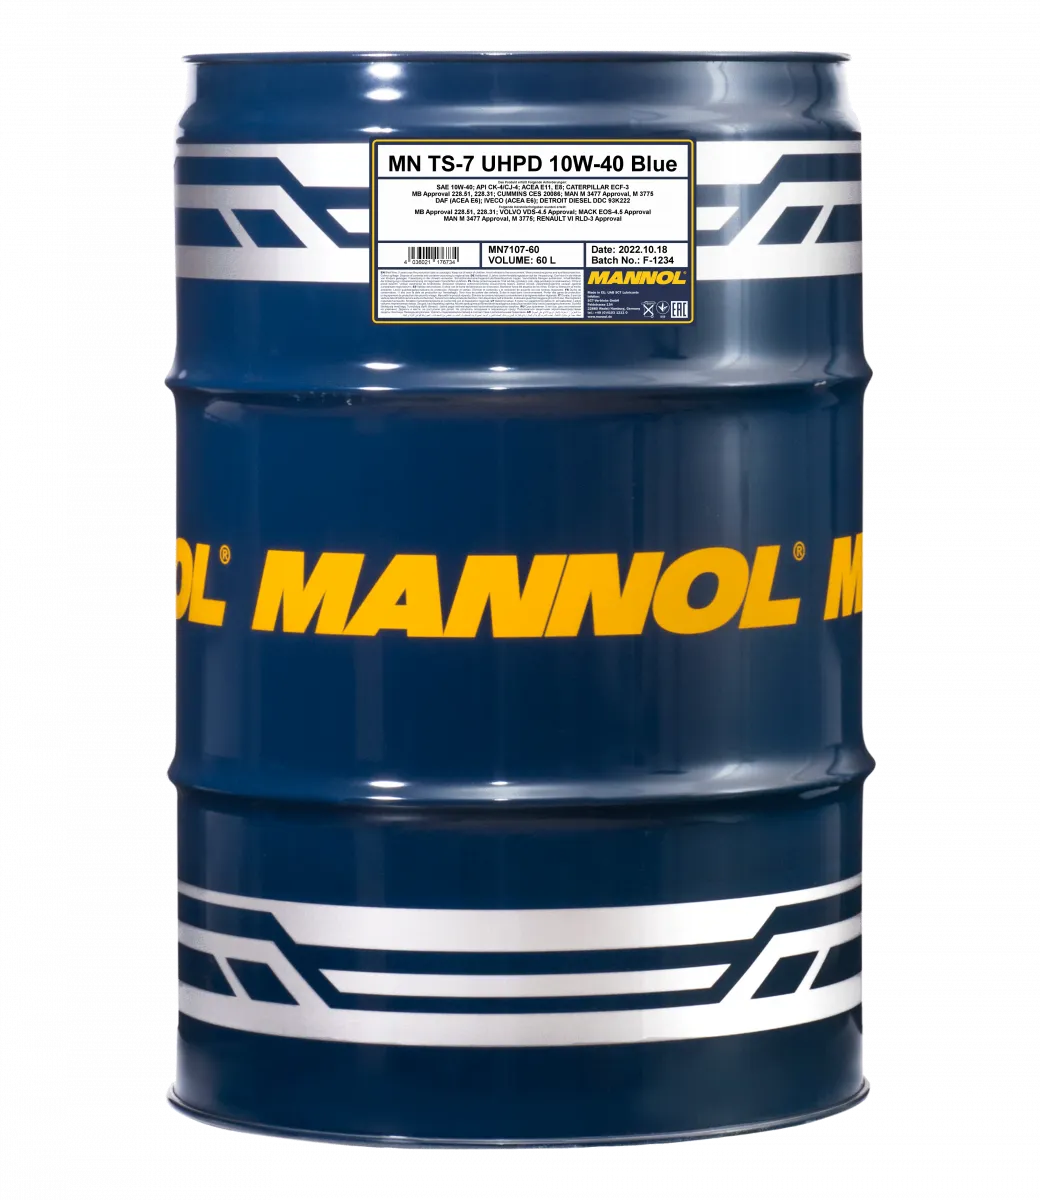 Моторное масло Mannol ts-7 uhpd 10W-40 Blue#2